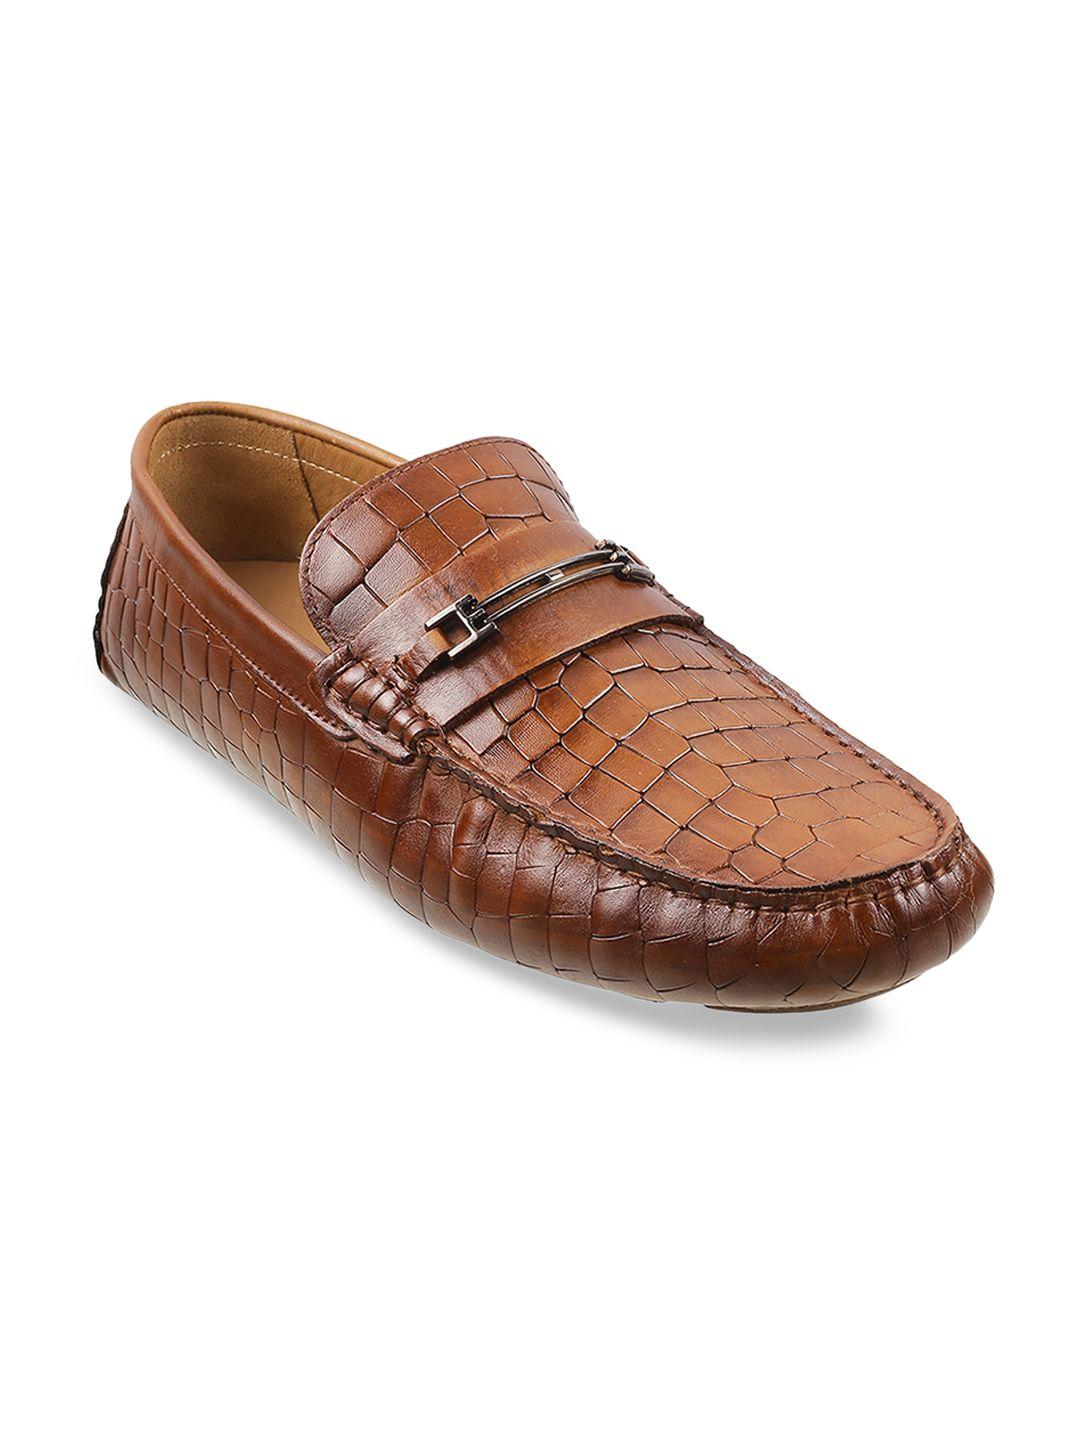 j fontini men tan woven design leather sneakers